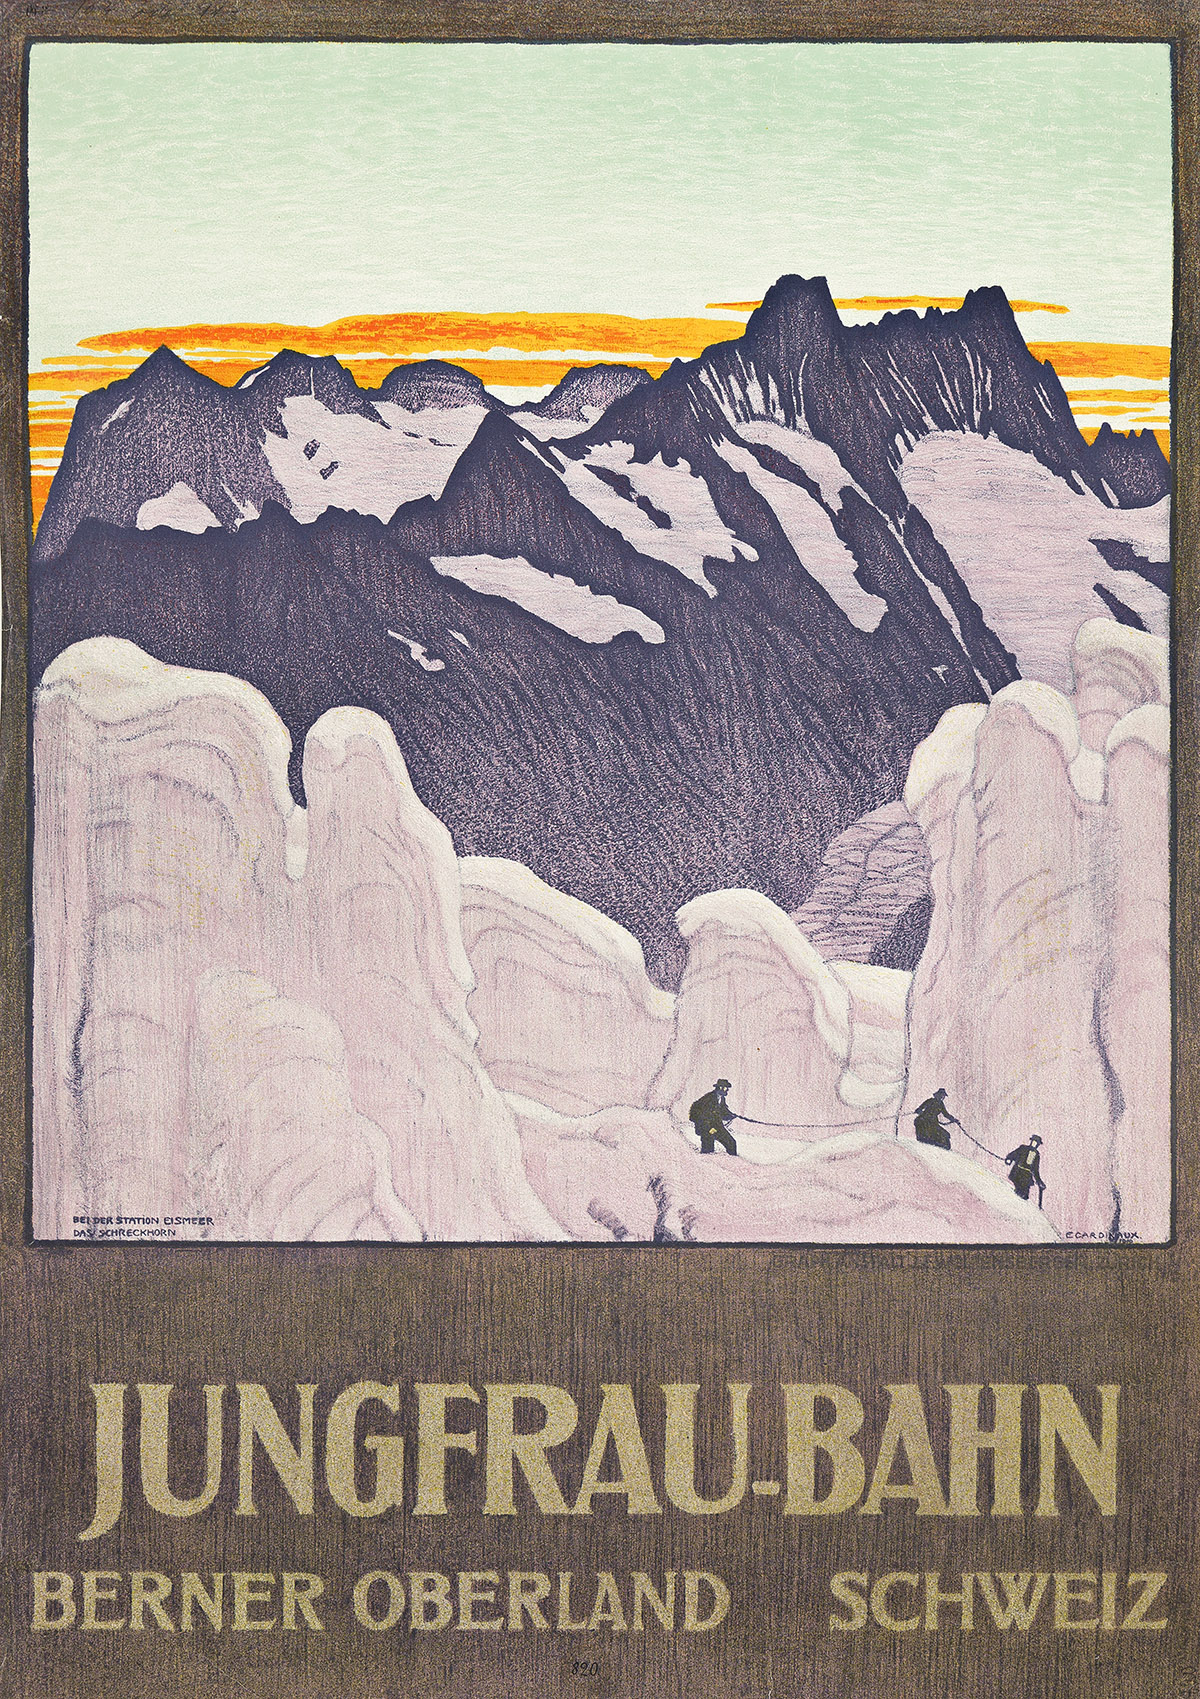 EMIL CARDINAUX (1877-1936).  JUNGFRAU - BAHN / BERNER OBERLAND SCHWEIZ. 1910. 40x28 inches, 101½x71 cm. J.E. Wolfensburger, Zurich.